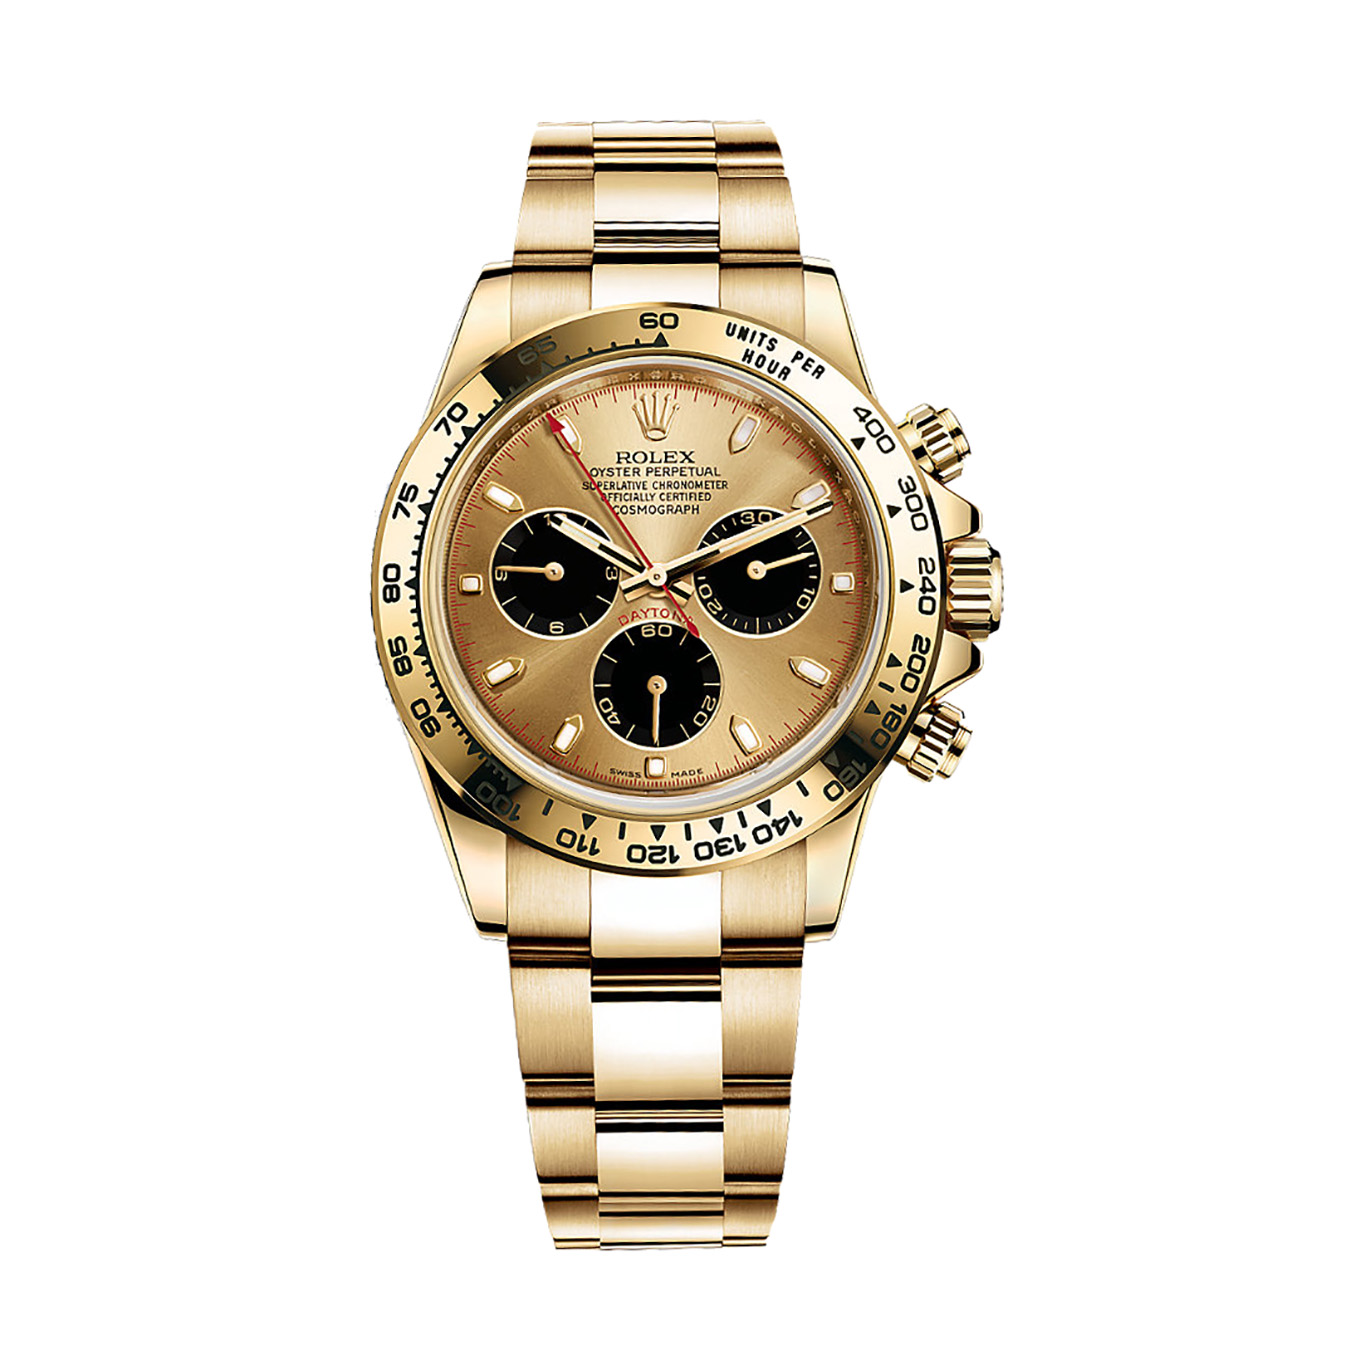 Cosmograph Daytona 116508 Gold Watch (Champagne, Black)